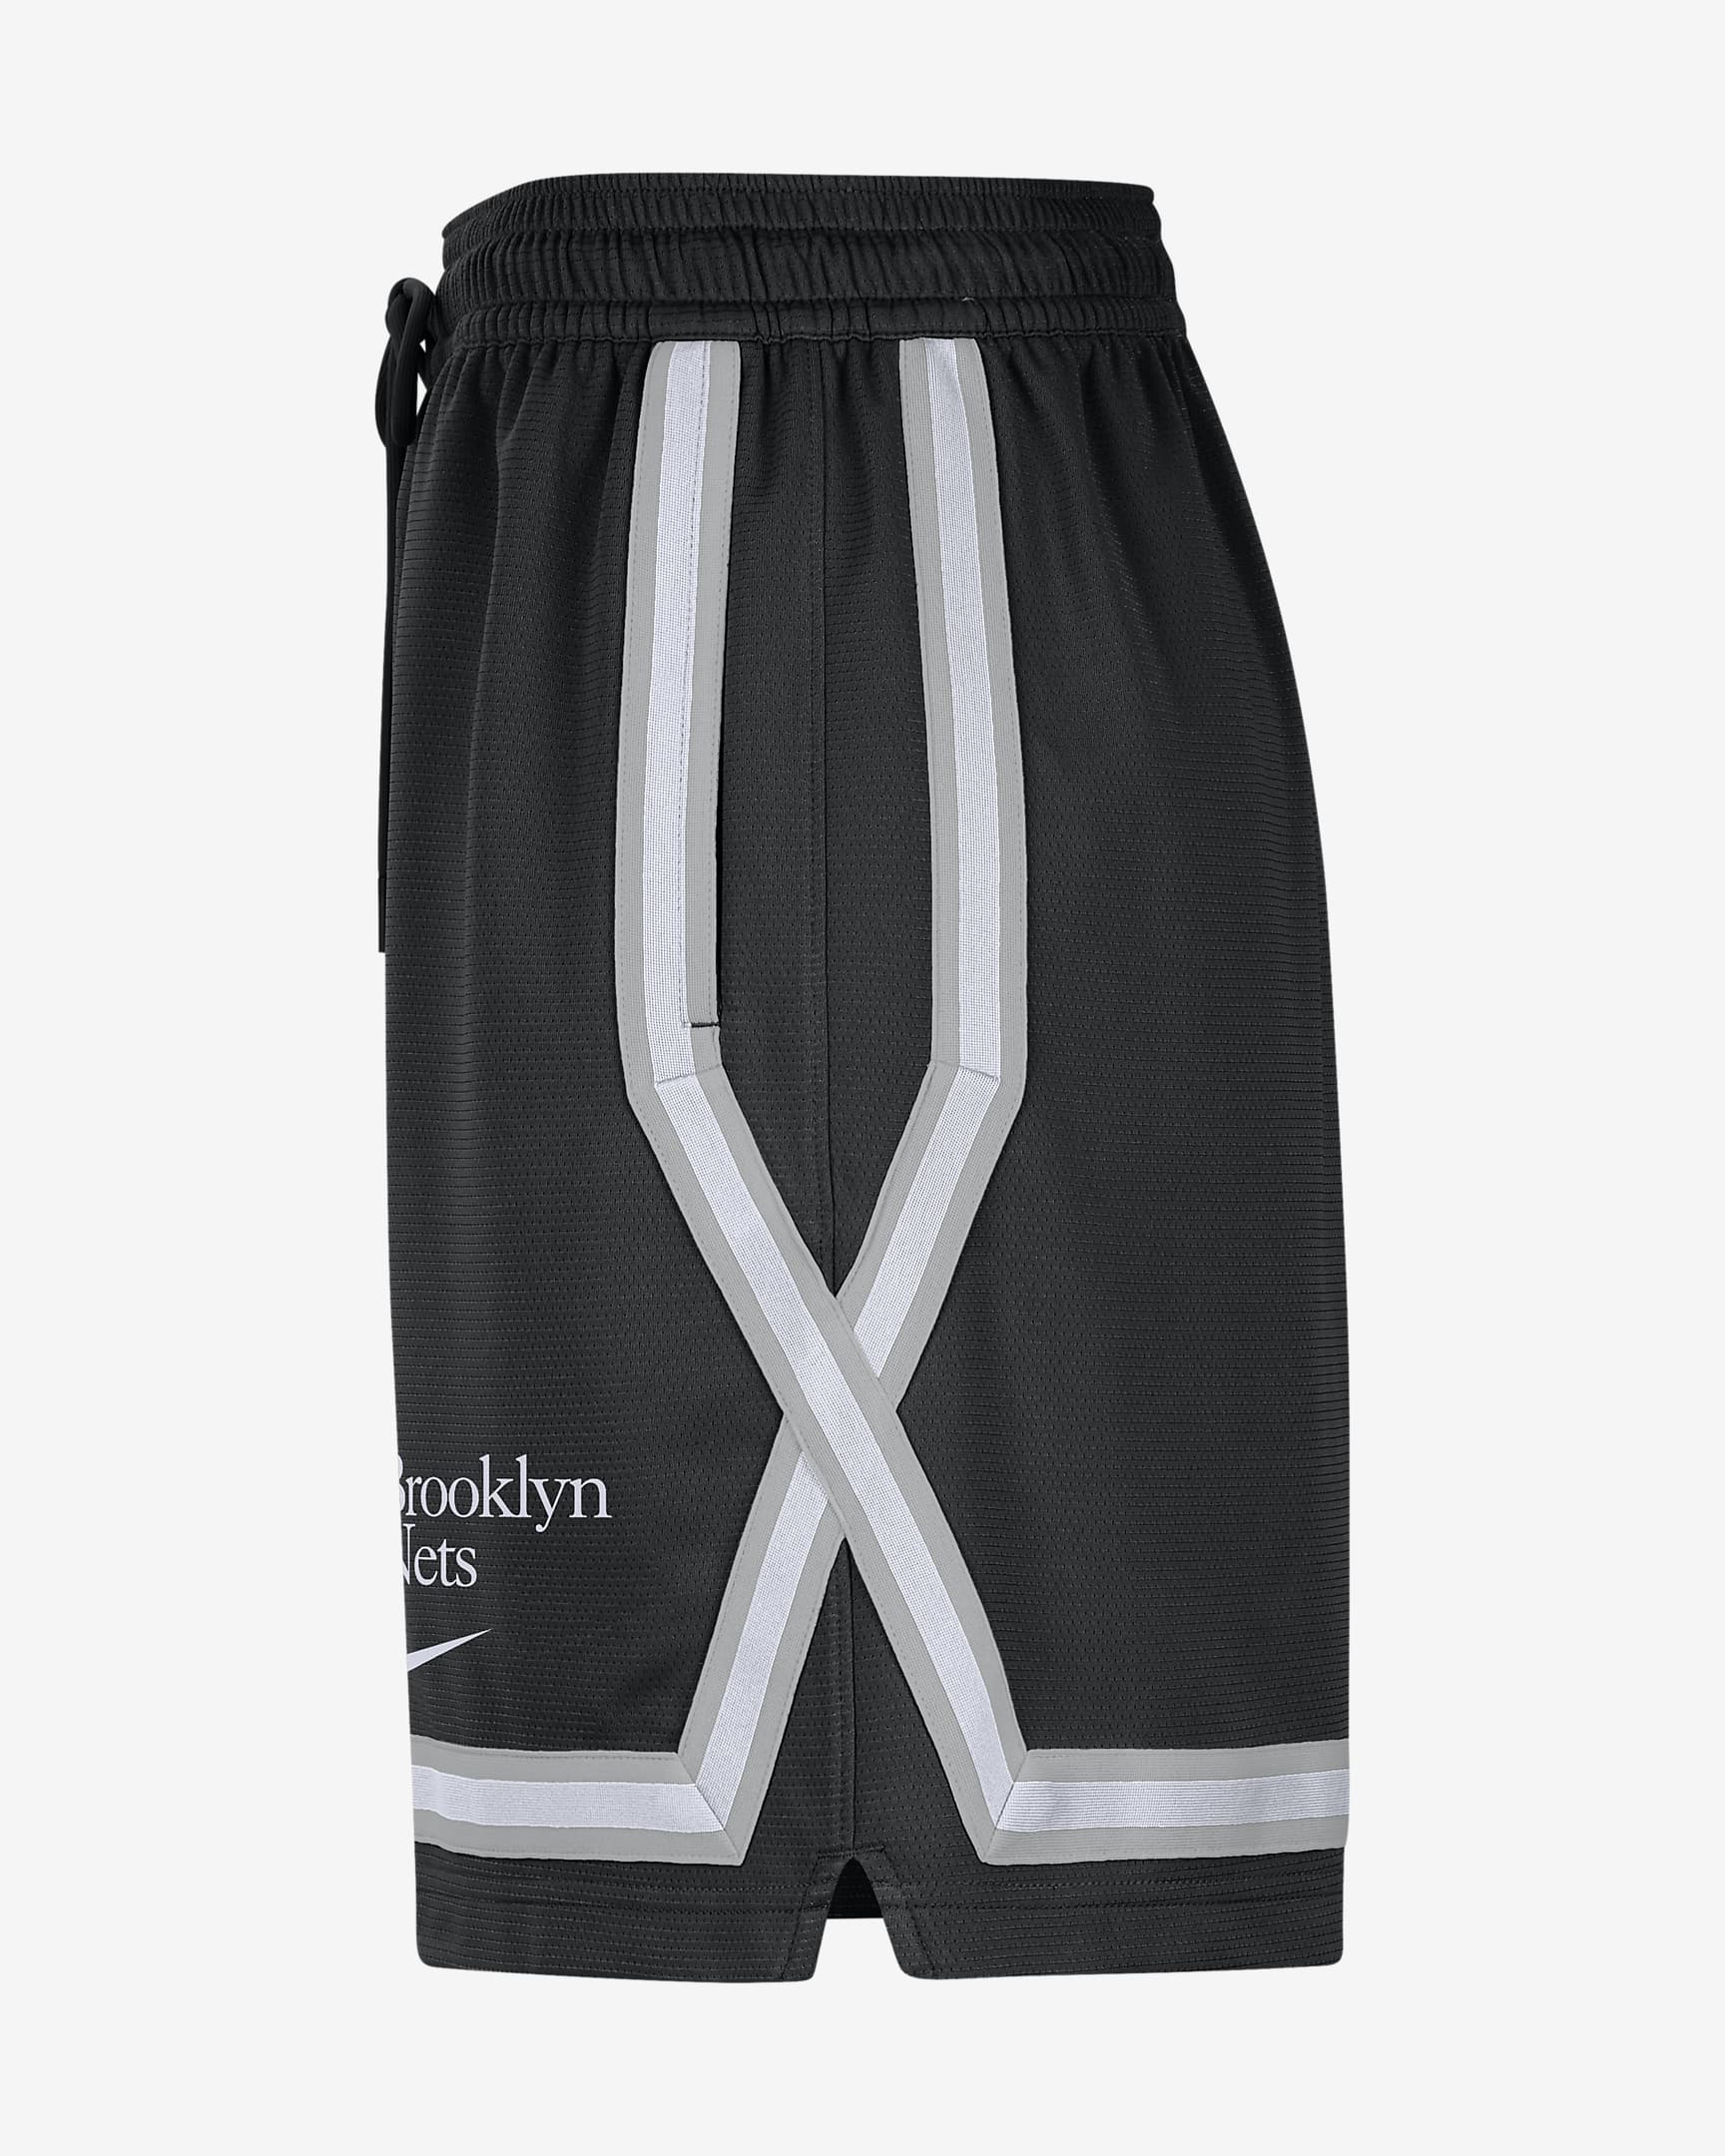 Short de basket à motif Nike Dri-FIT NBA Brooklyn Nets Fly Crossover pour femme - Noir/Blanc/Flat Silver